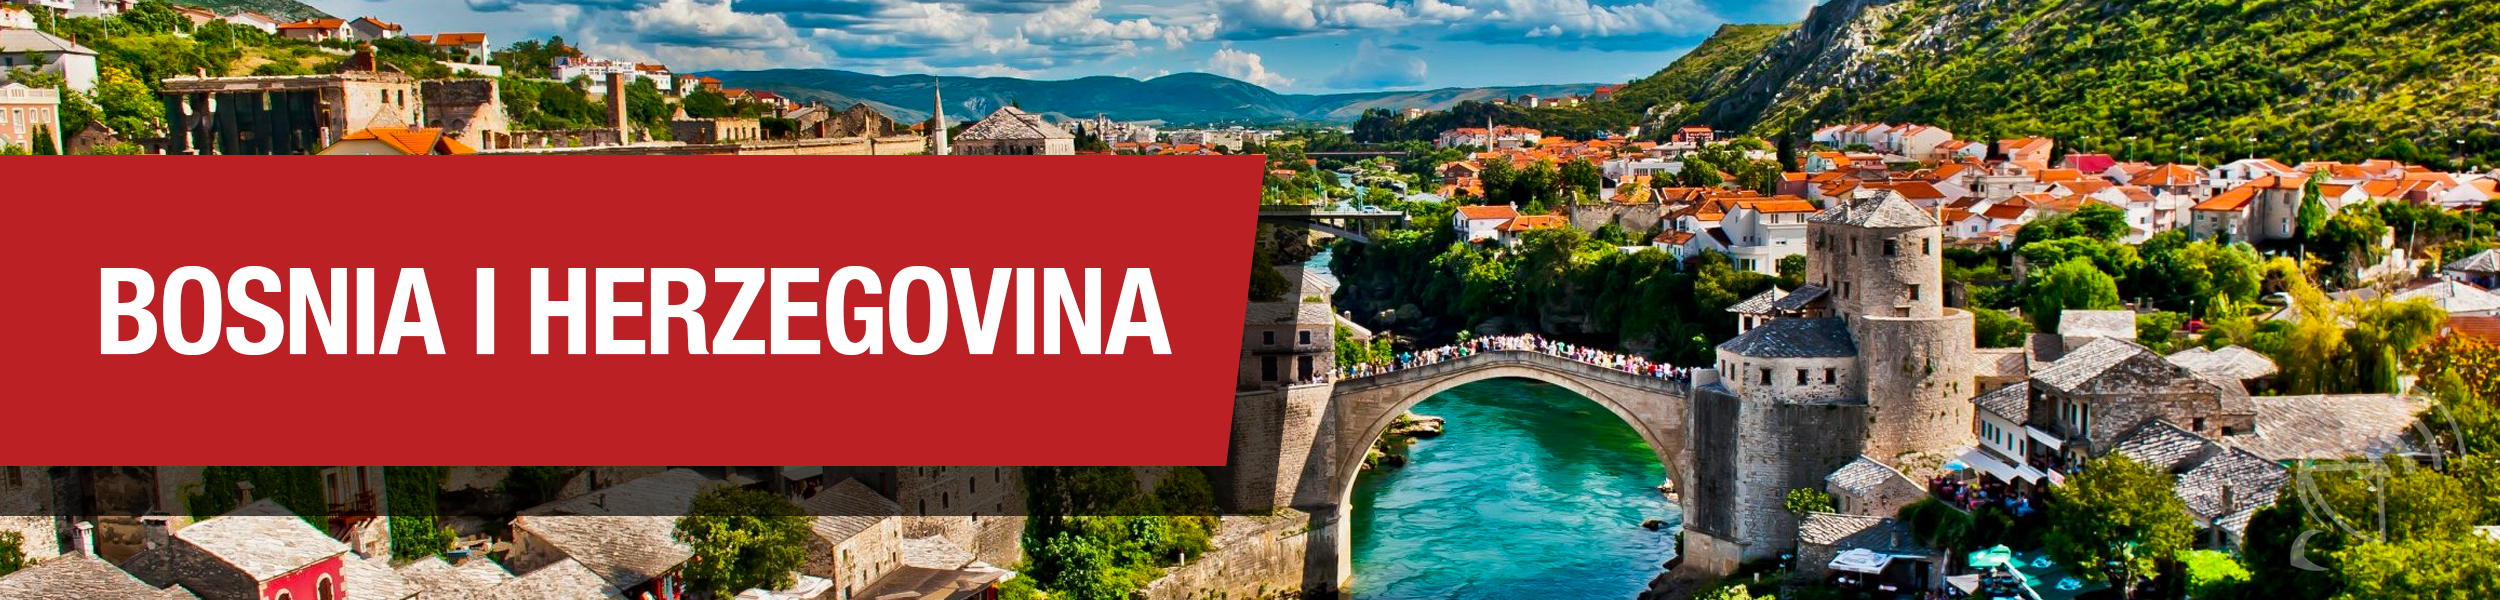 Bośnia i Hercegowina (TH)